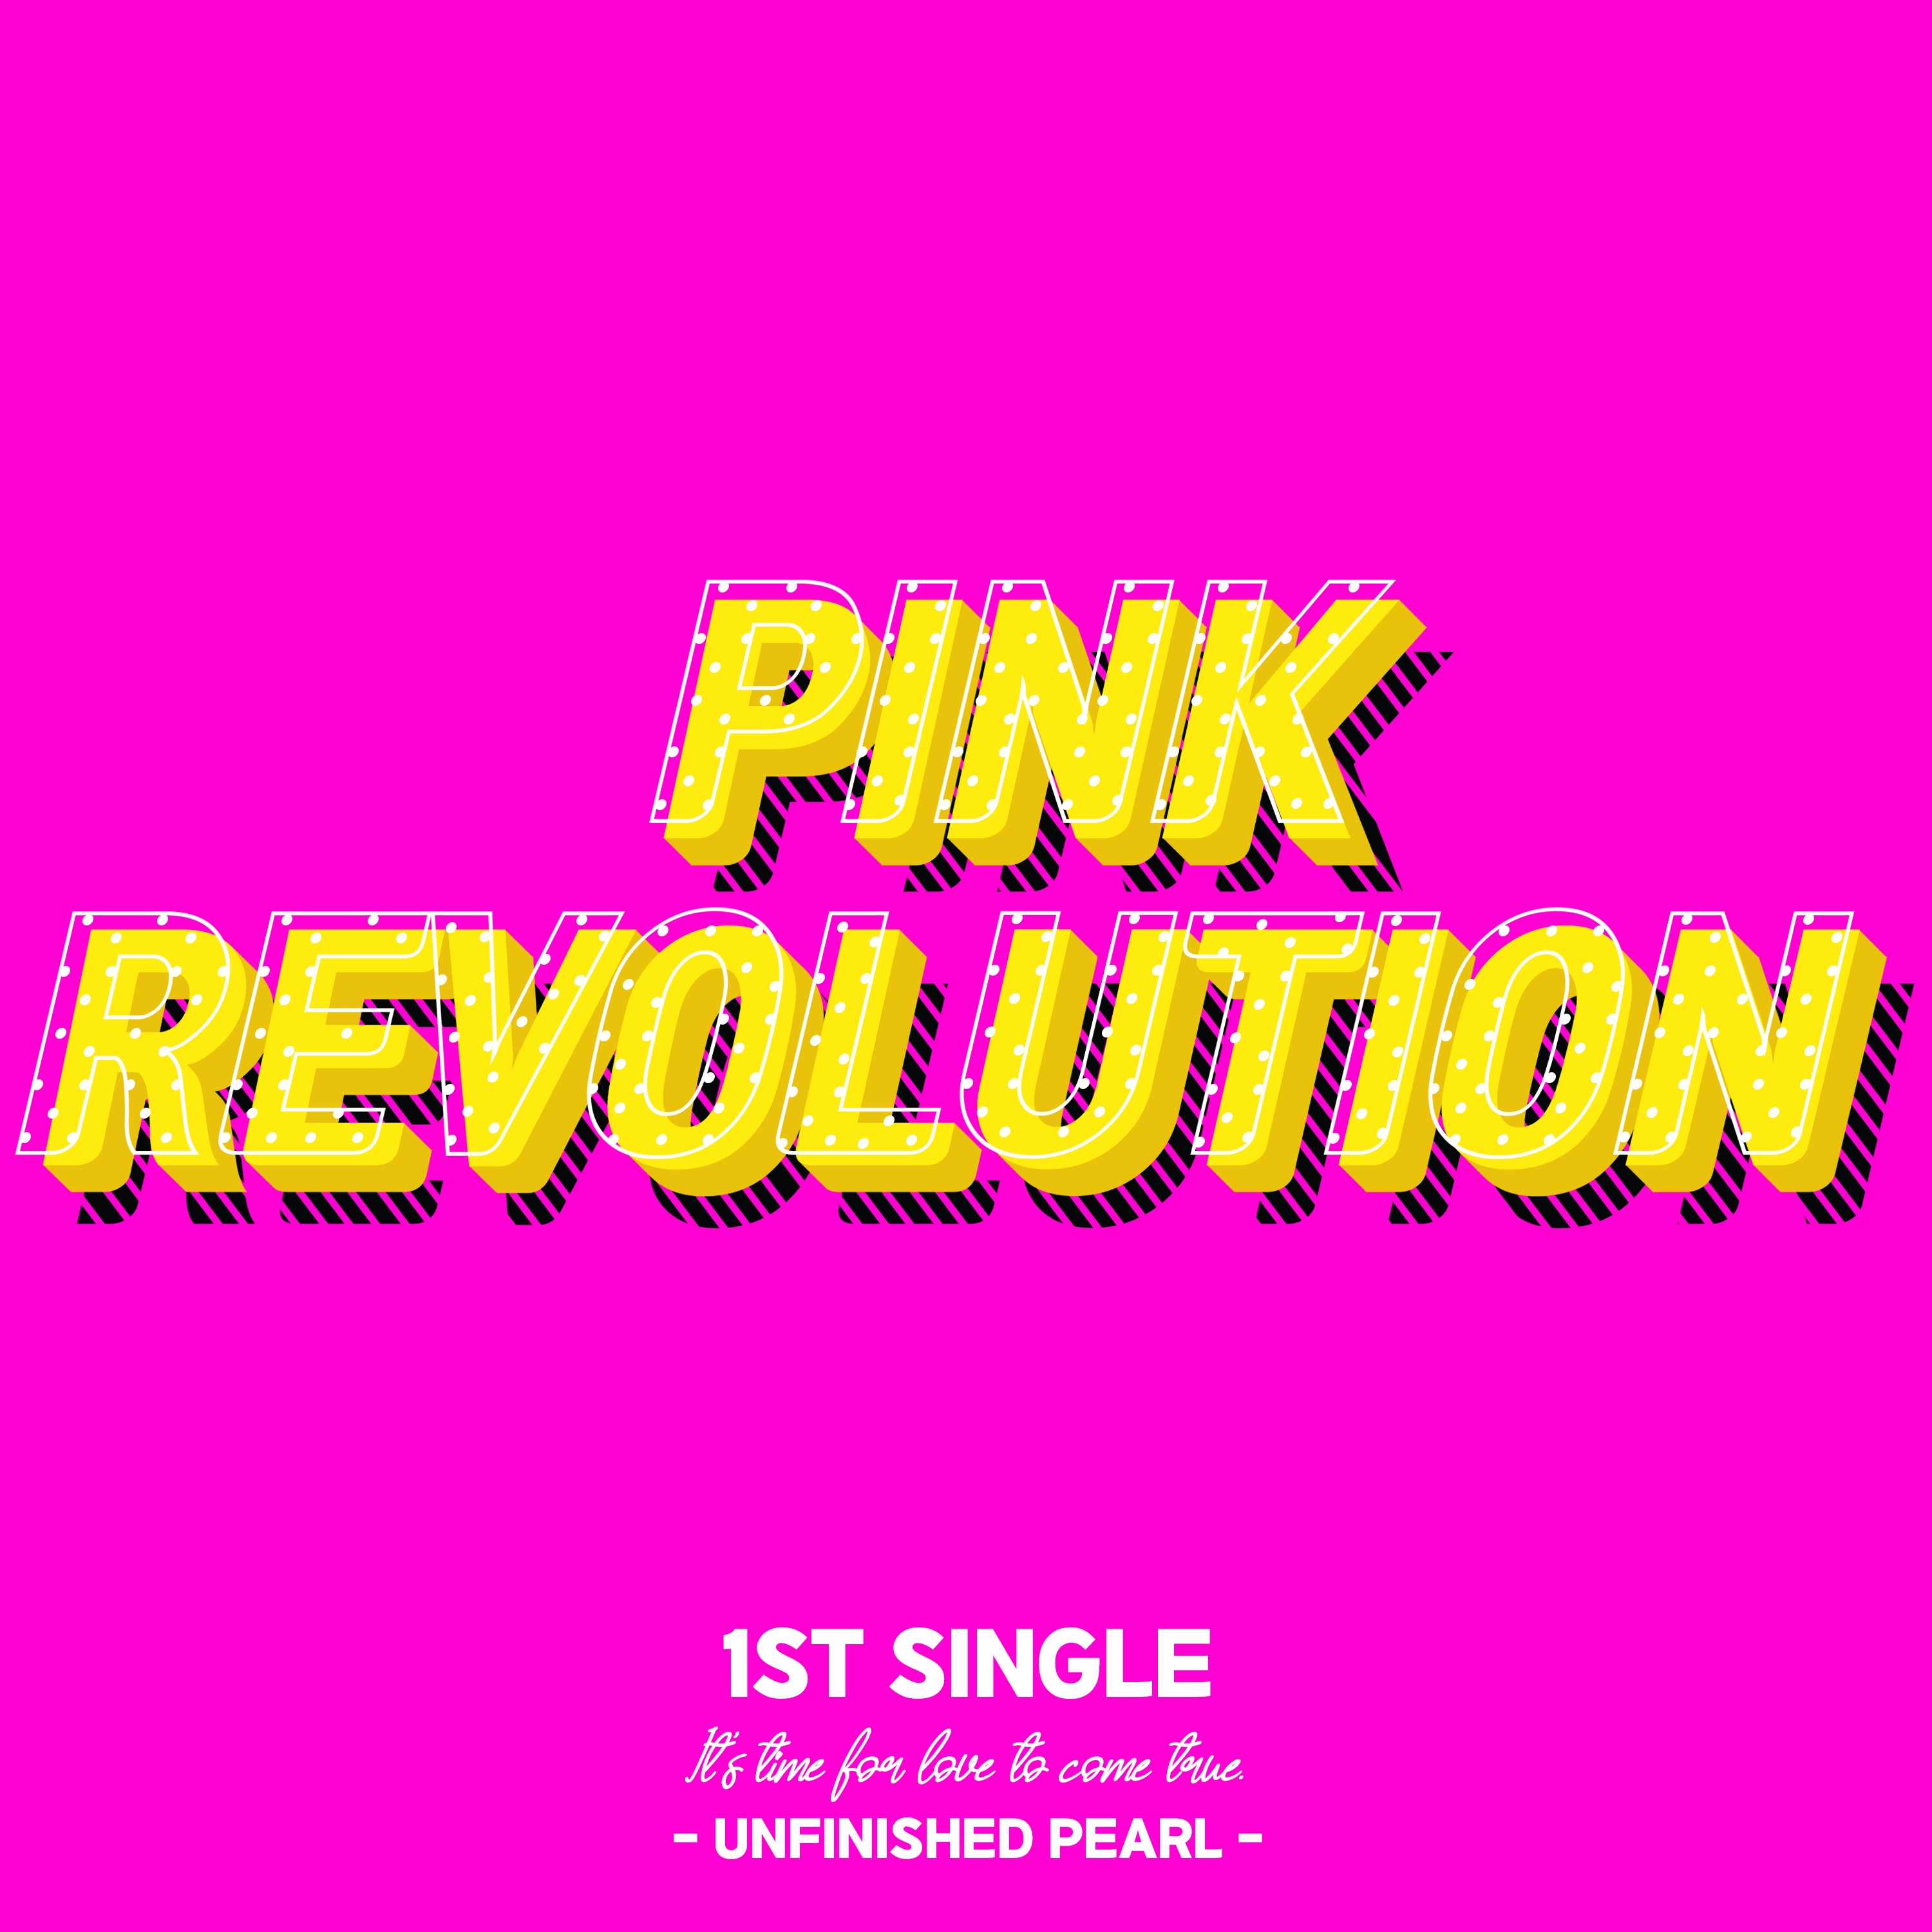 Pink Revolution